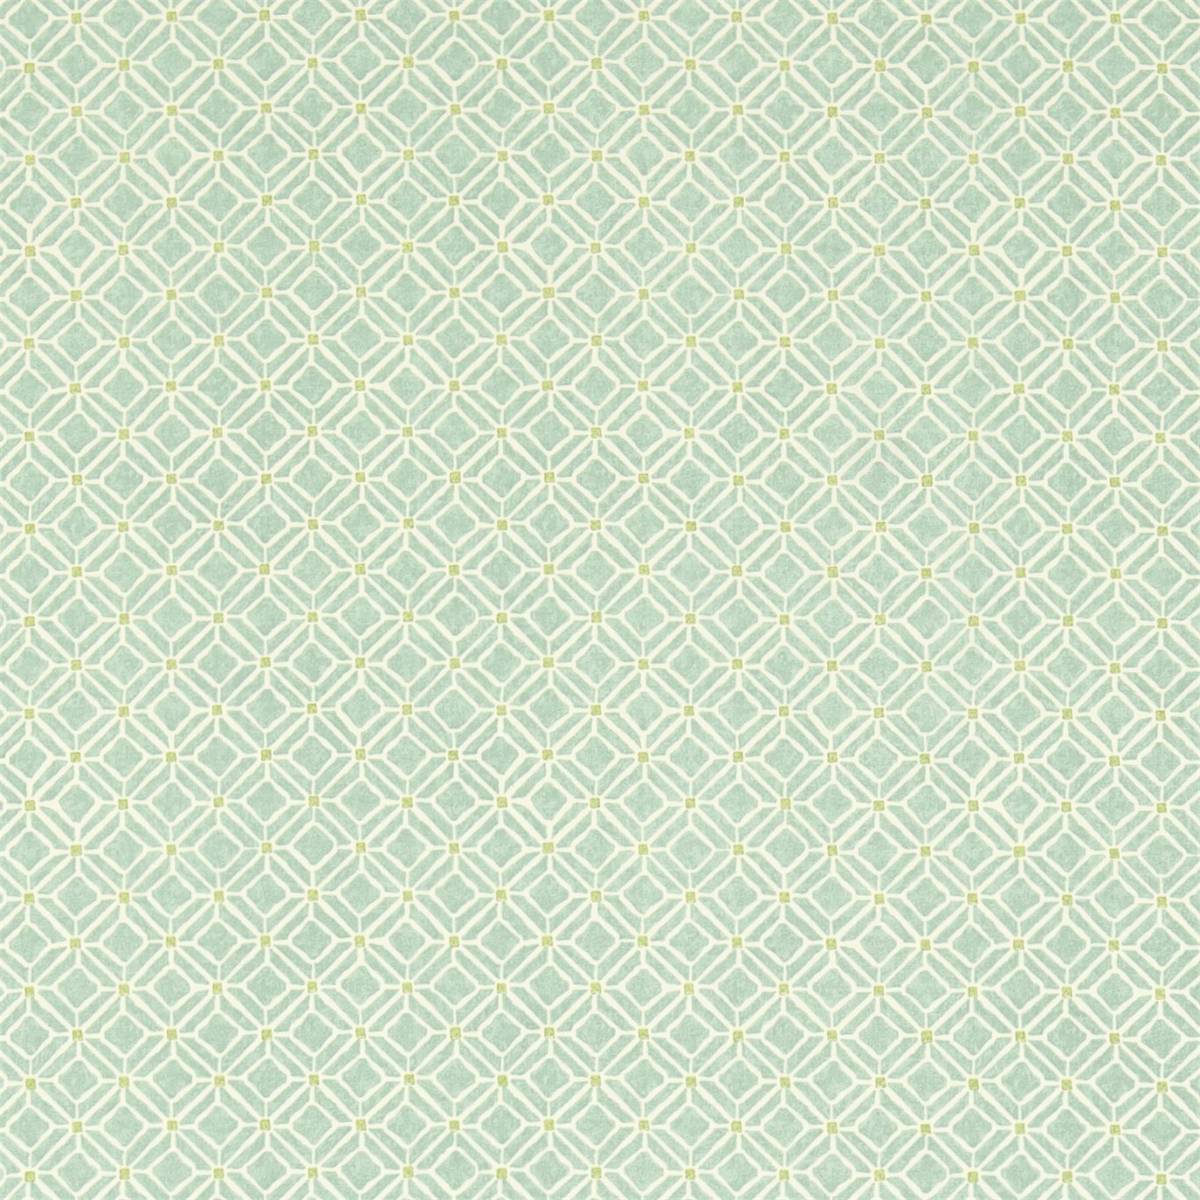 Fretwork Aqua/Lime Fabric by Sanderson